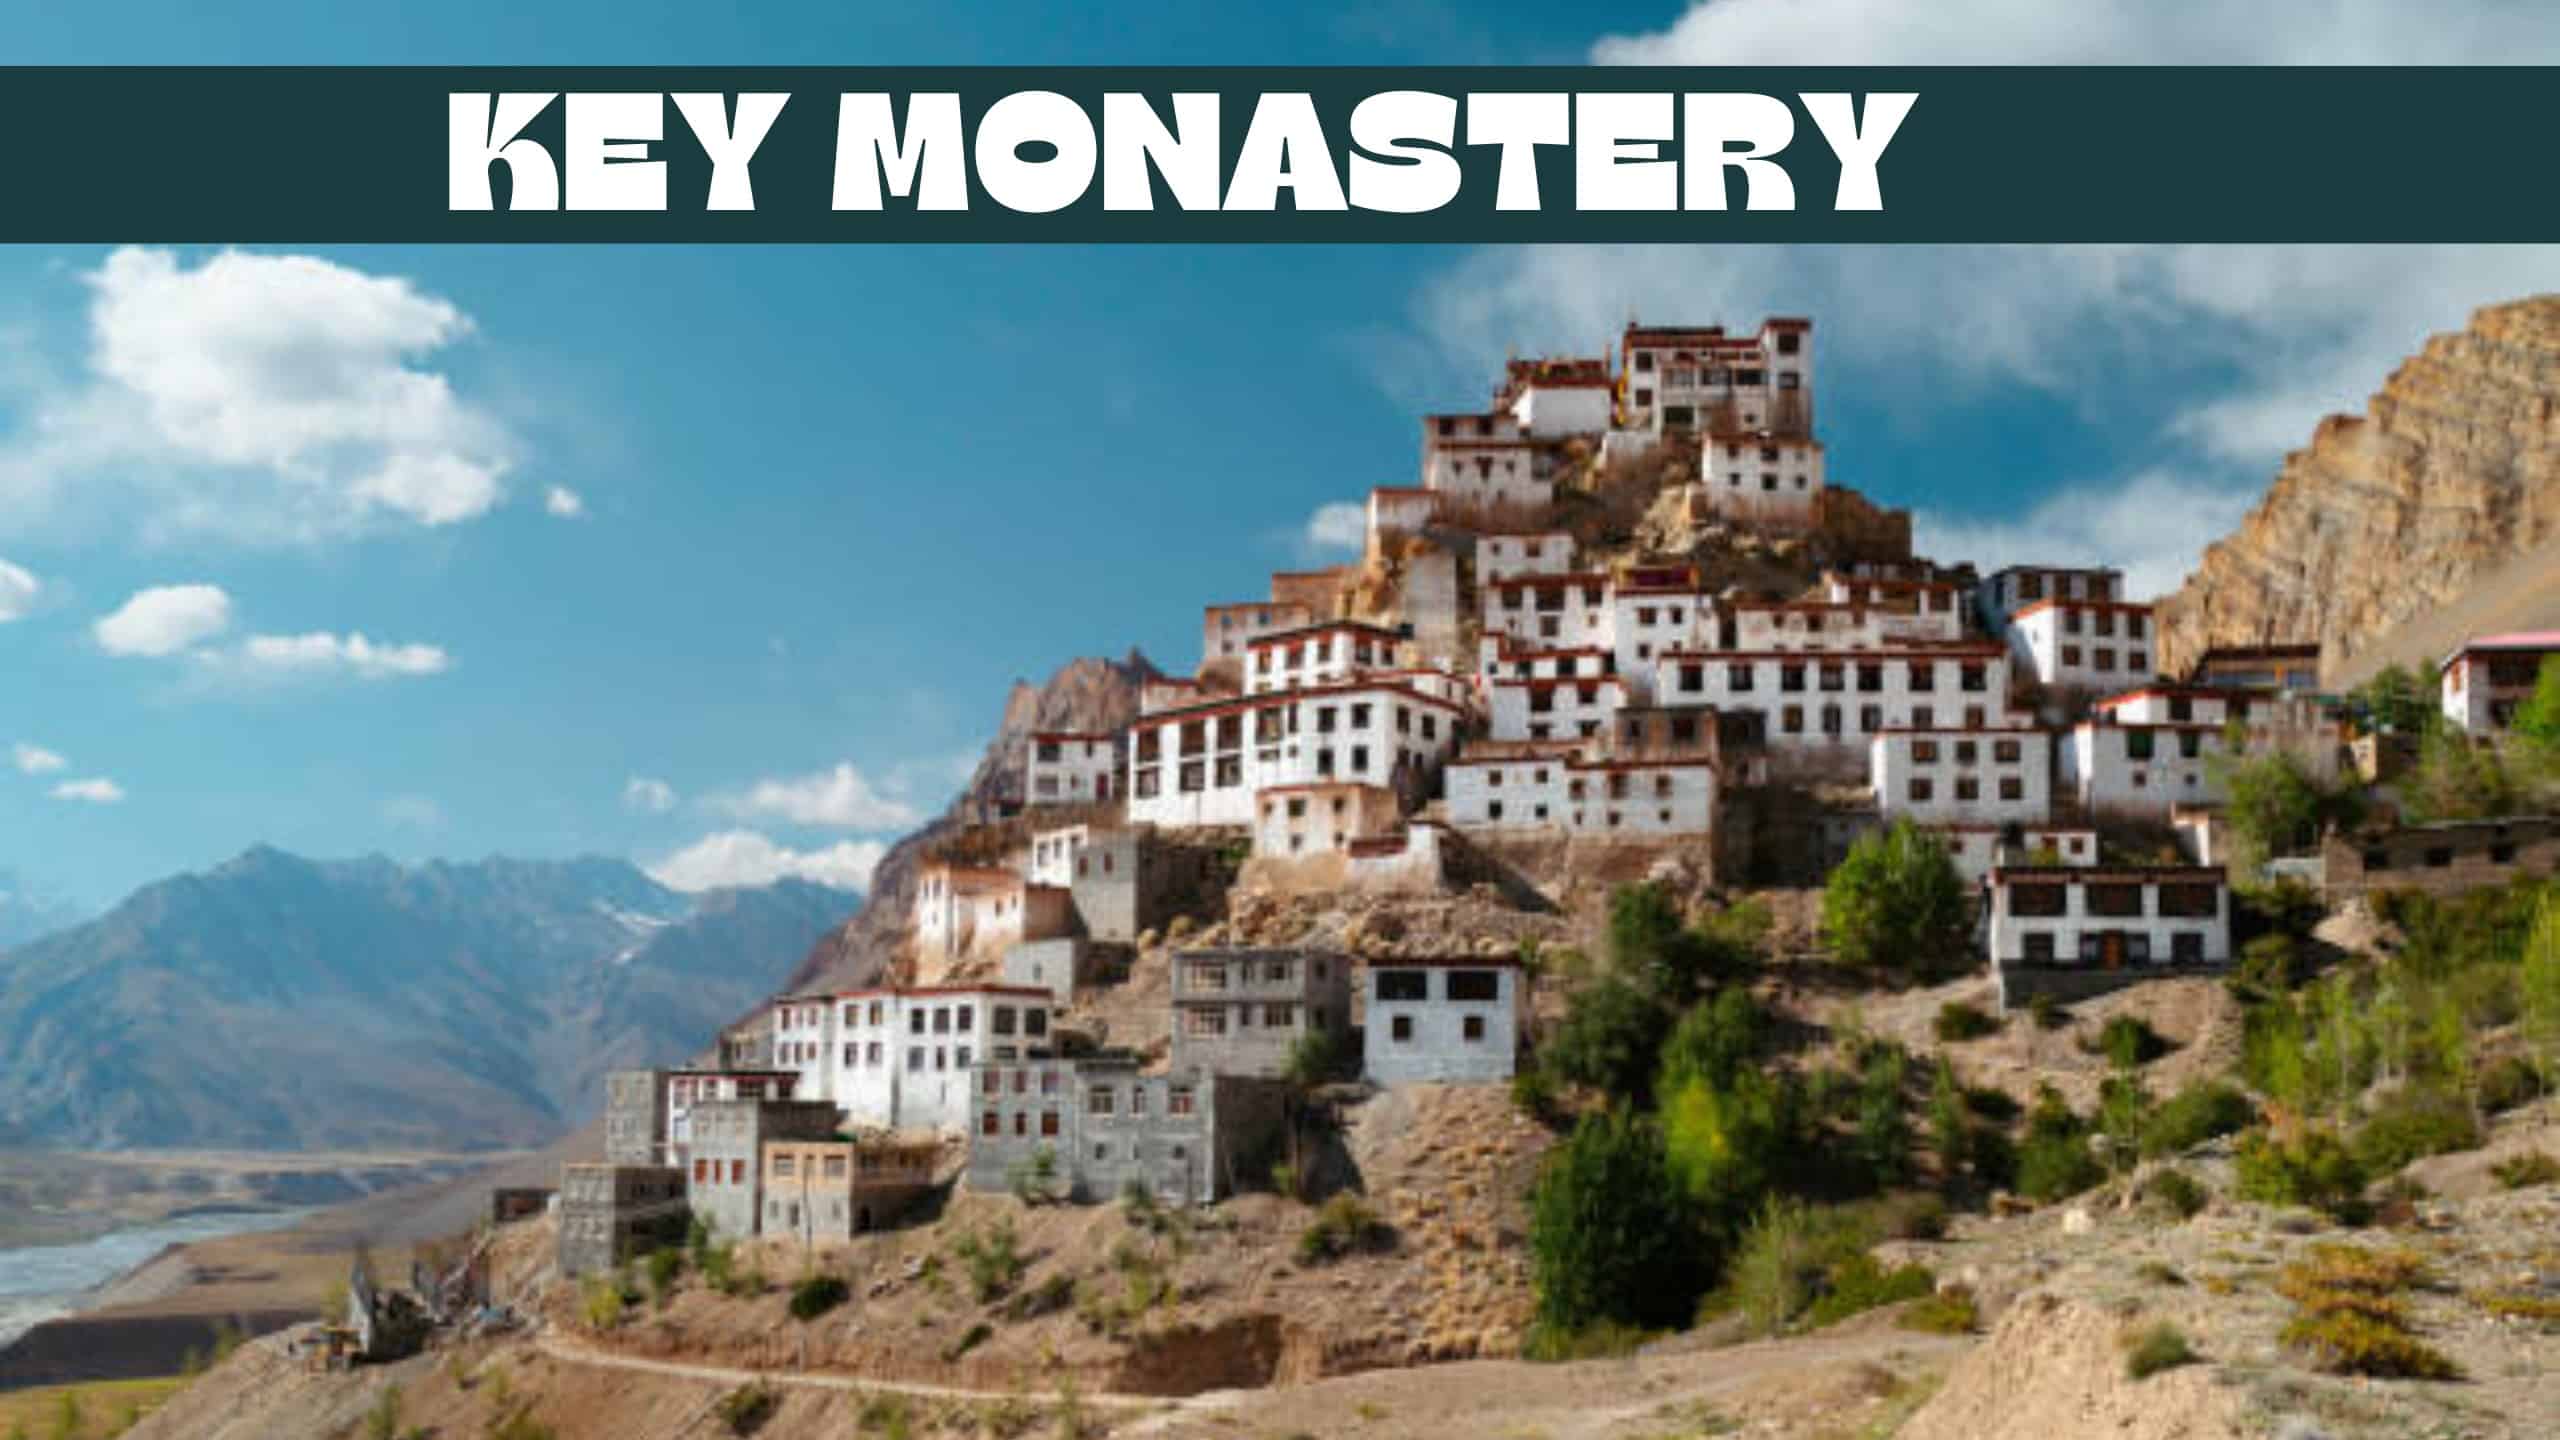 Key monastery himachal pradesh